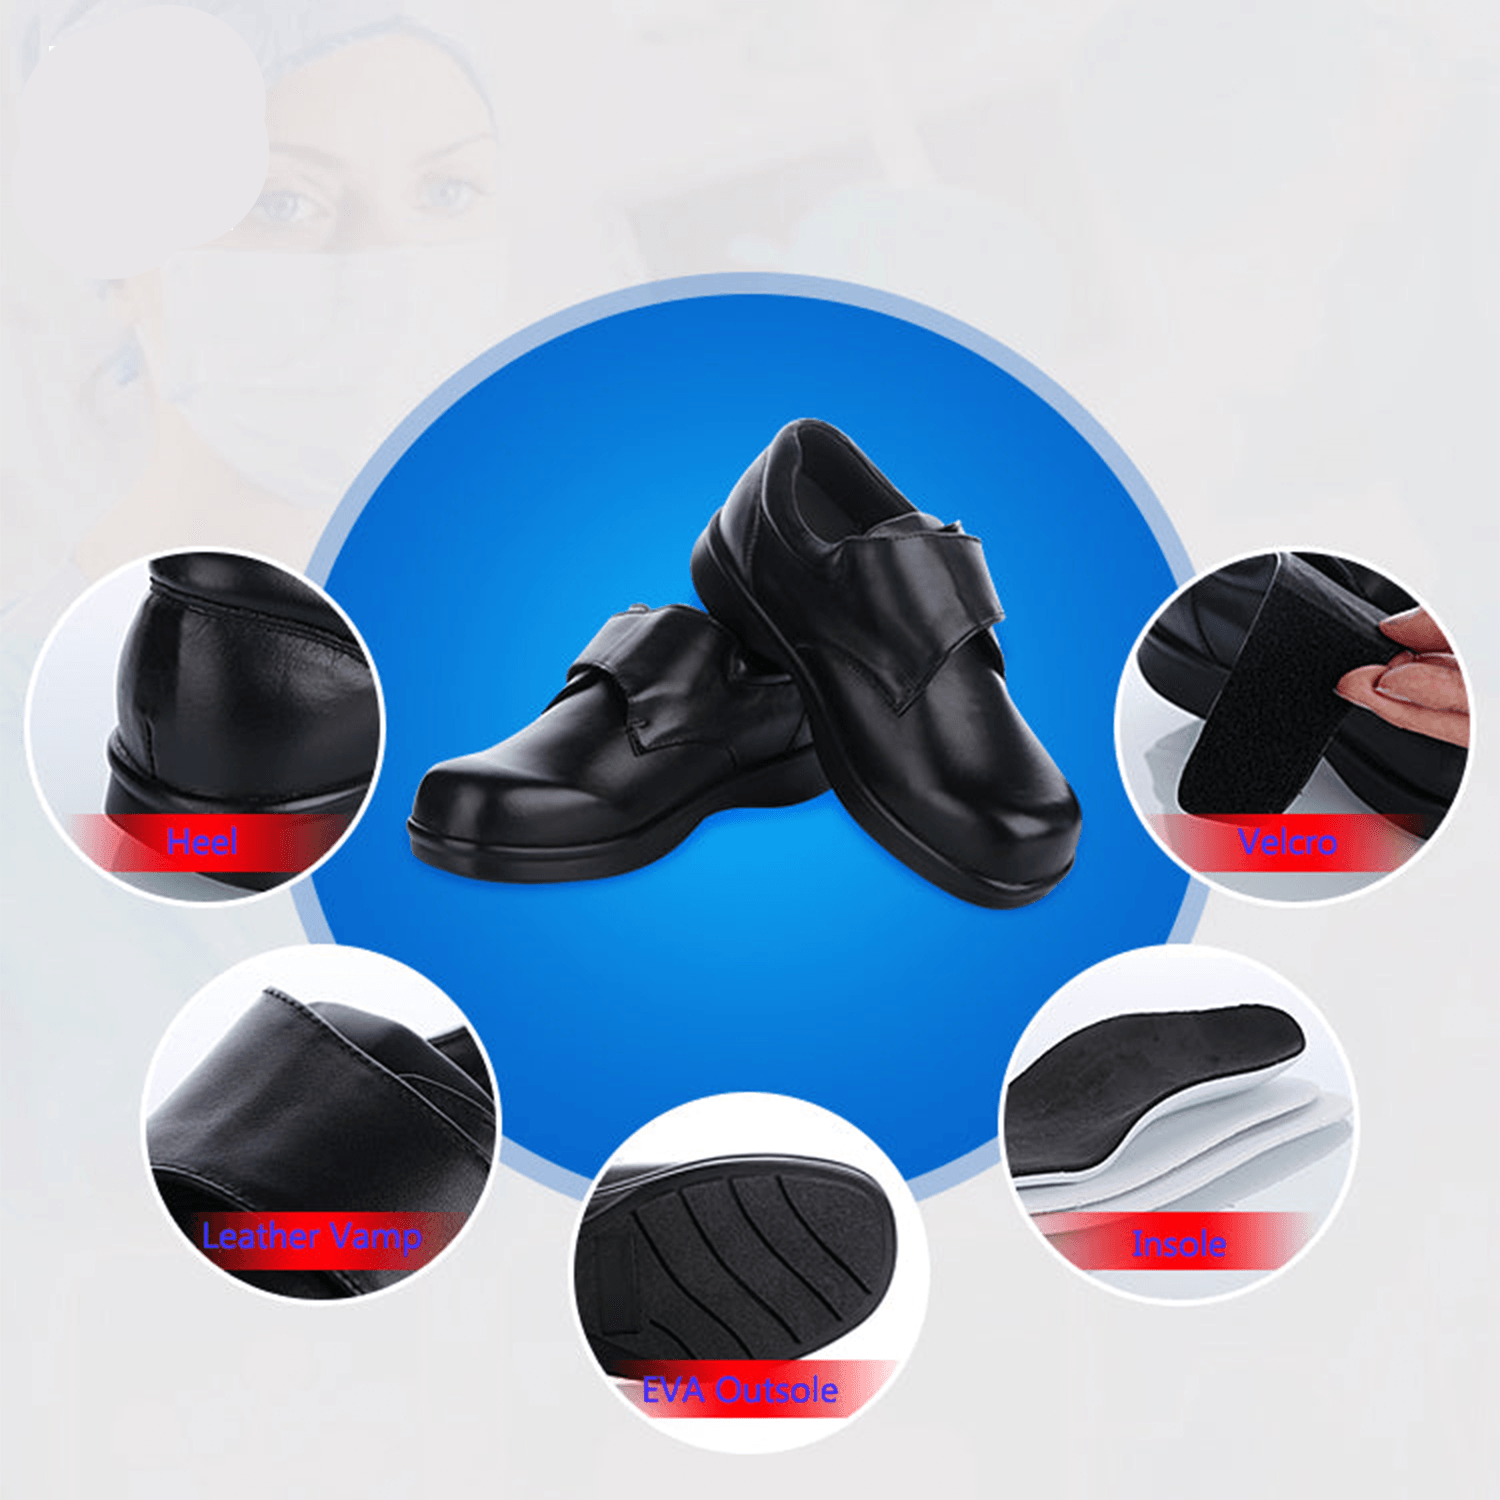 Black Leather Medical Grade Diabetic Footwear - Anjelstore 